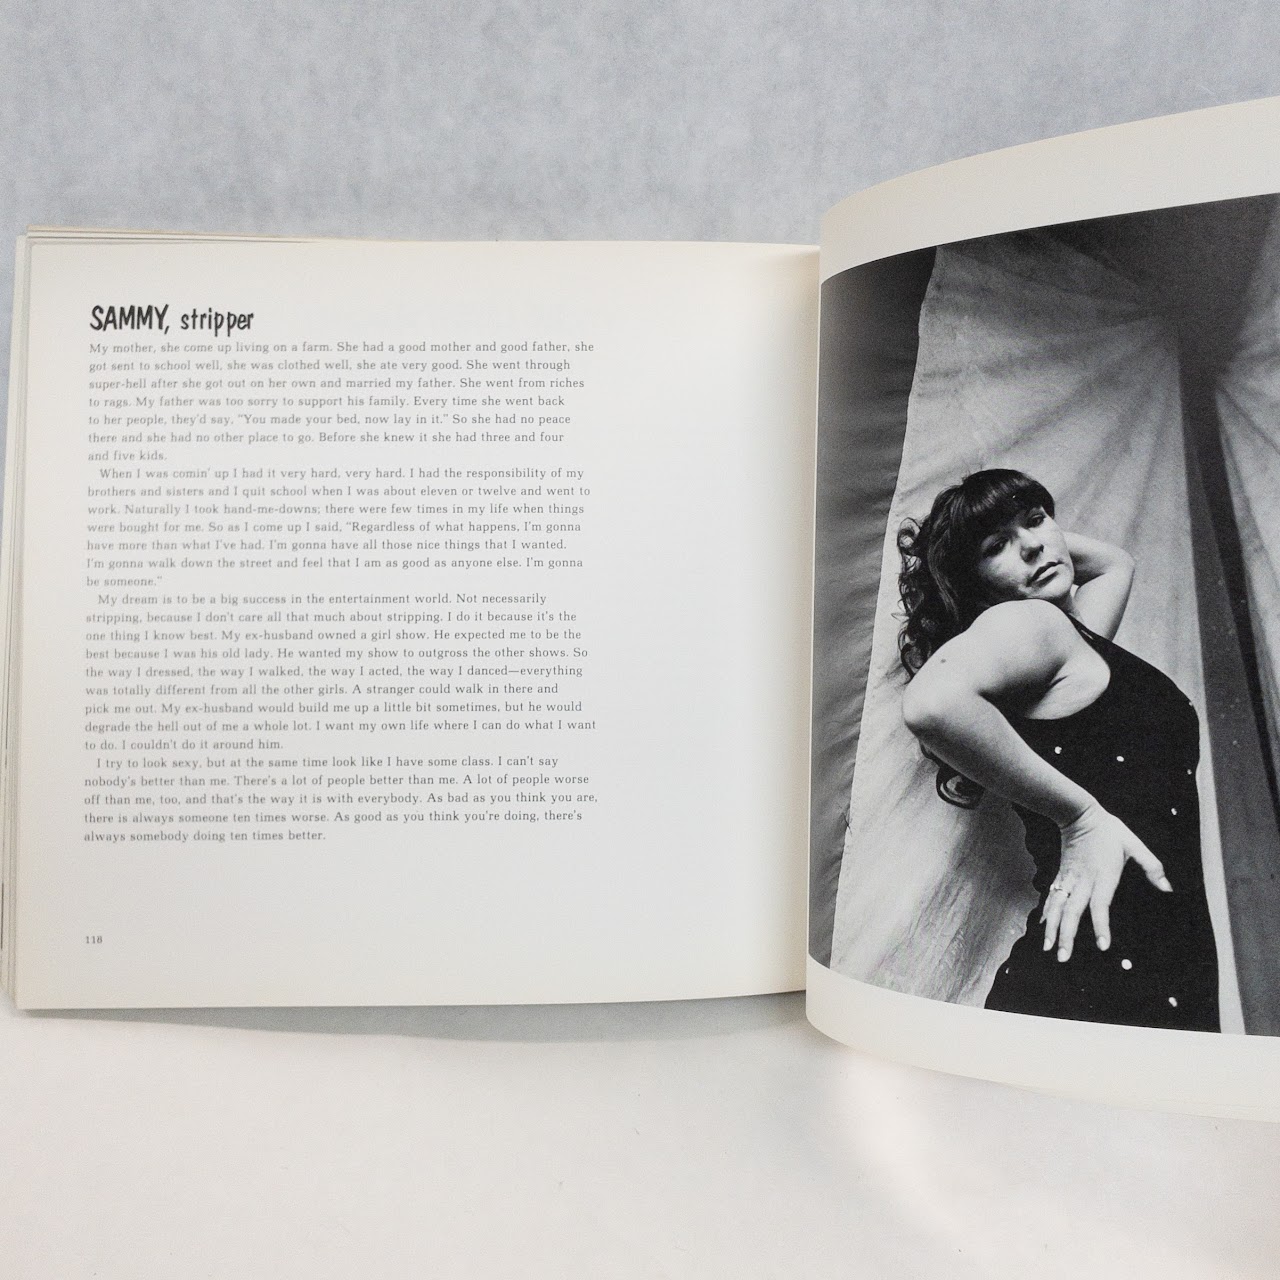 'Carnival Strippers' Susan Meiselas RARE First Printing